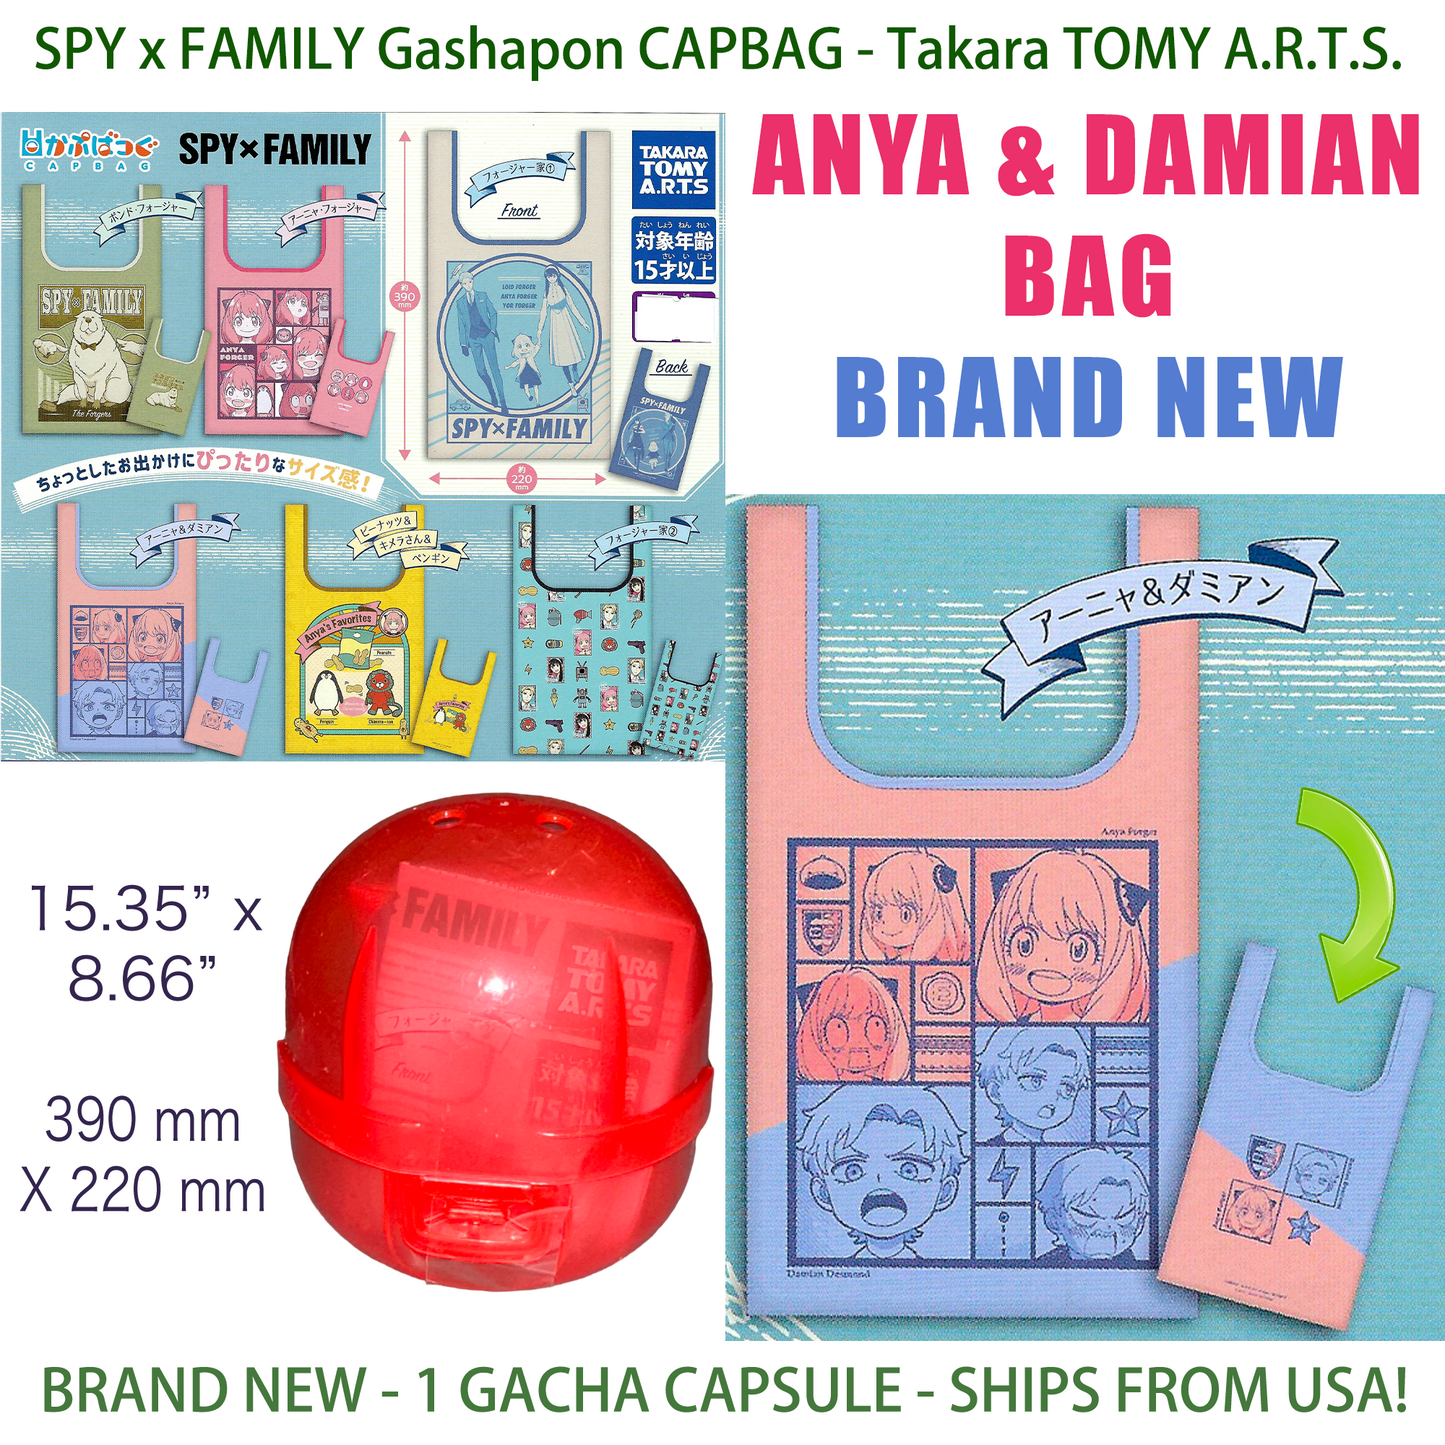 ANYA & DAMIAN - SPY x FAMILY CAPBAG - SPYxFAMILY Gashapon TAKARA TOMY ARTS (NEW)